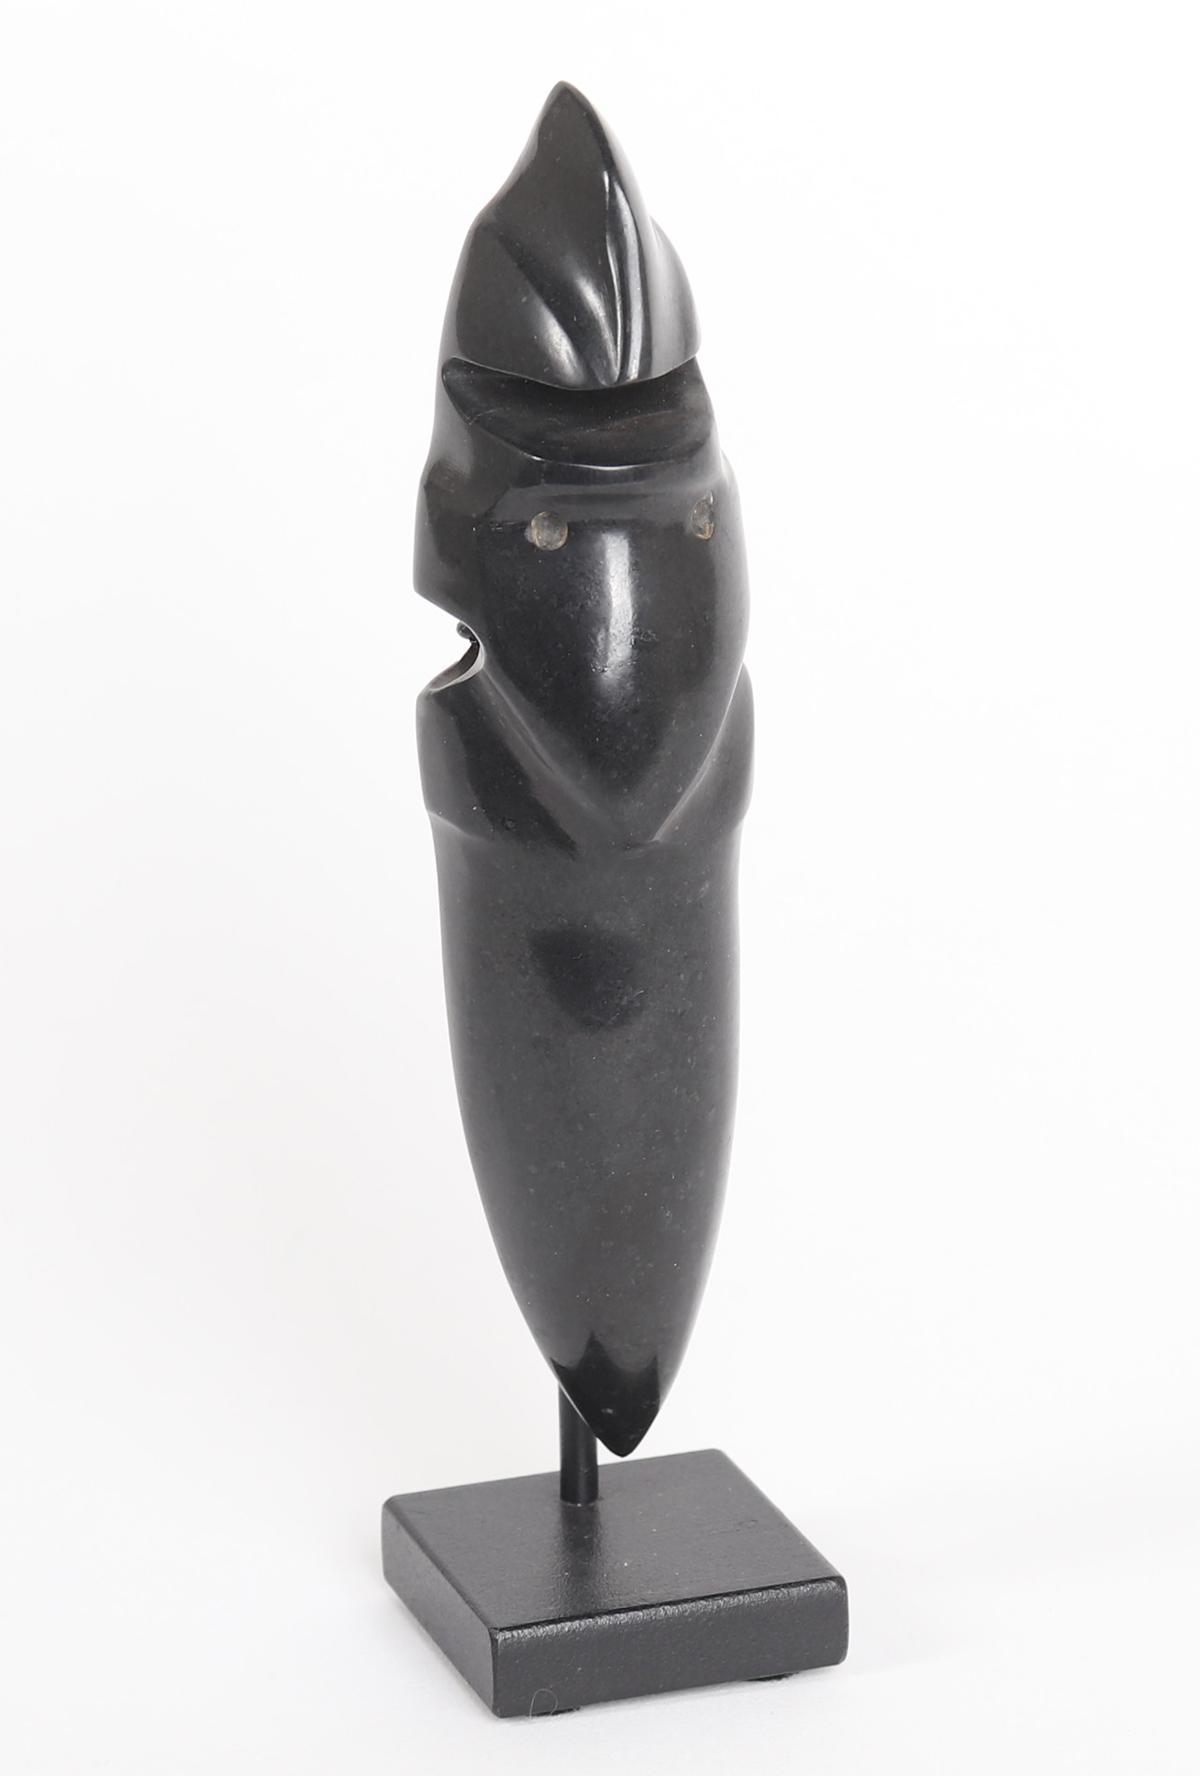 Pre-Columbian Polished Obsidian Figure